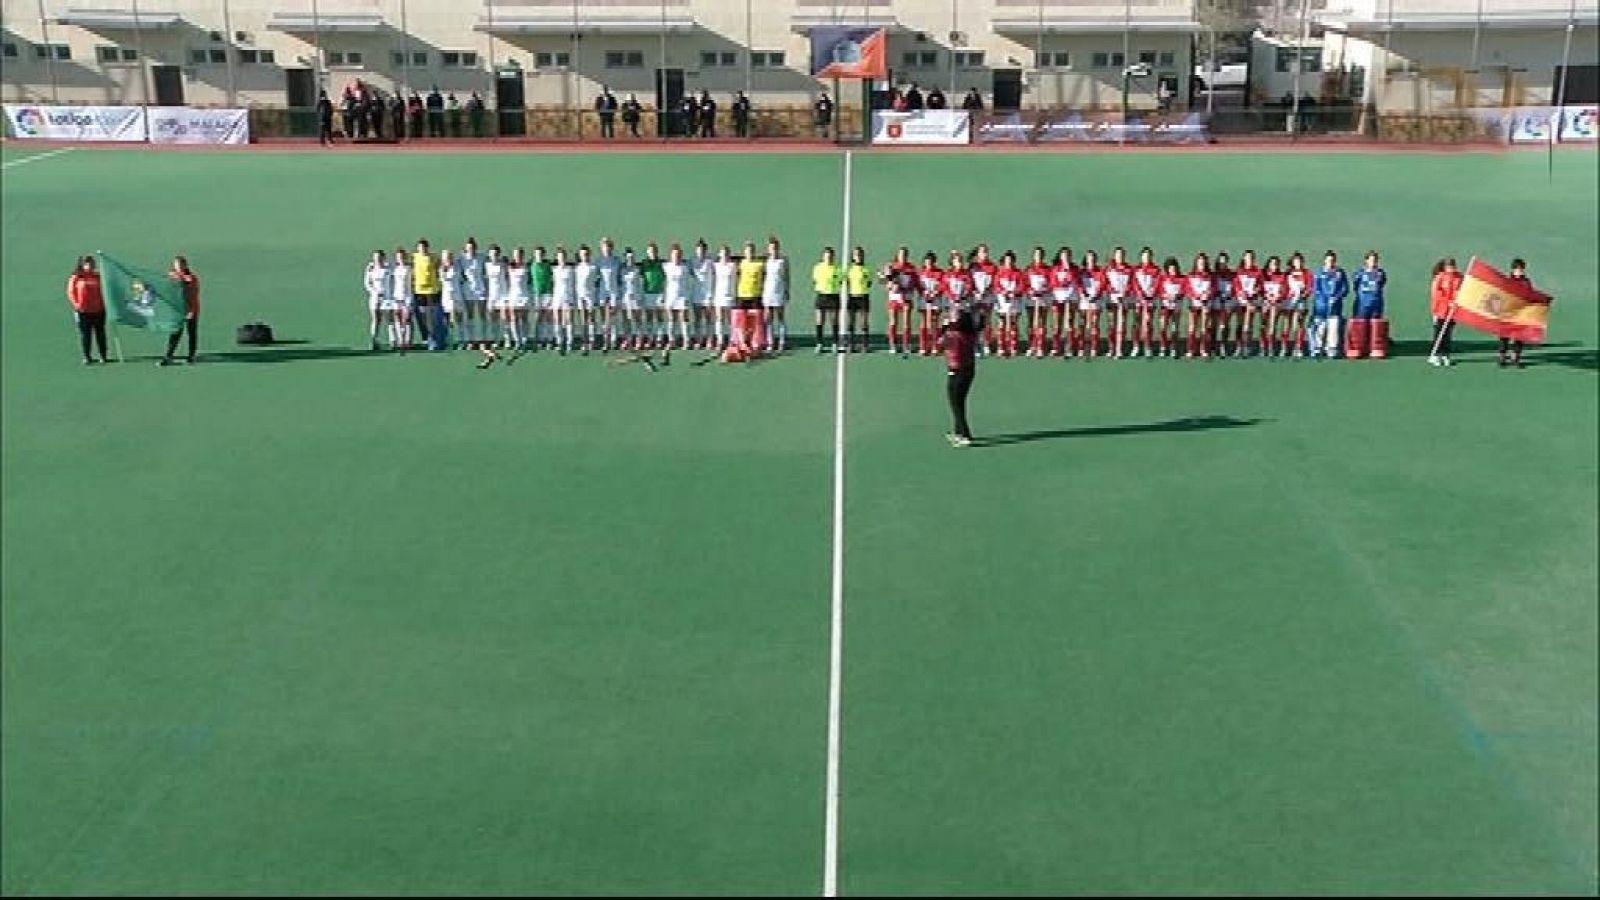 Hockey hierba - Amistoso Selección Femenina: España - Irlanda